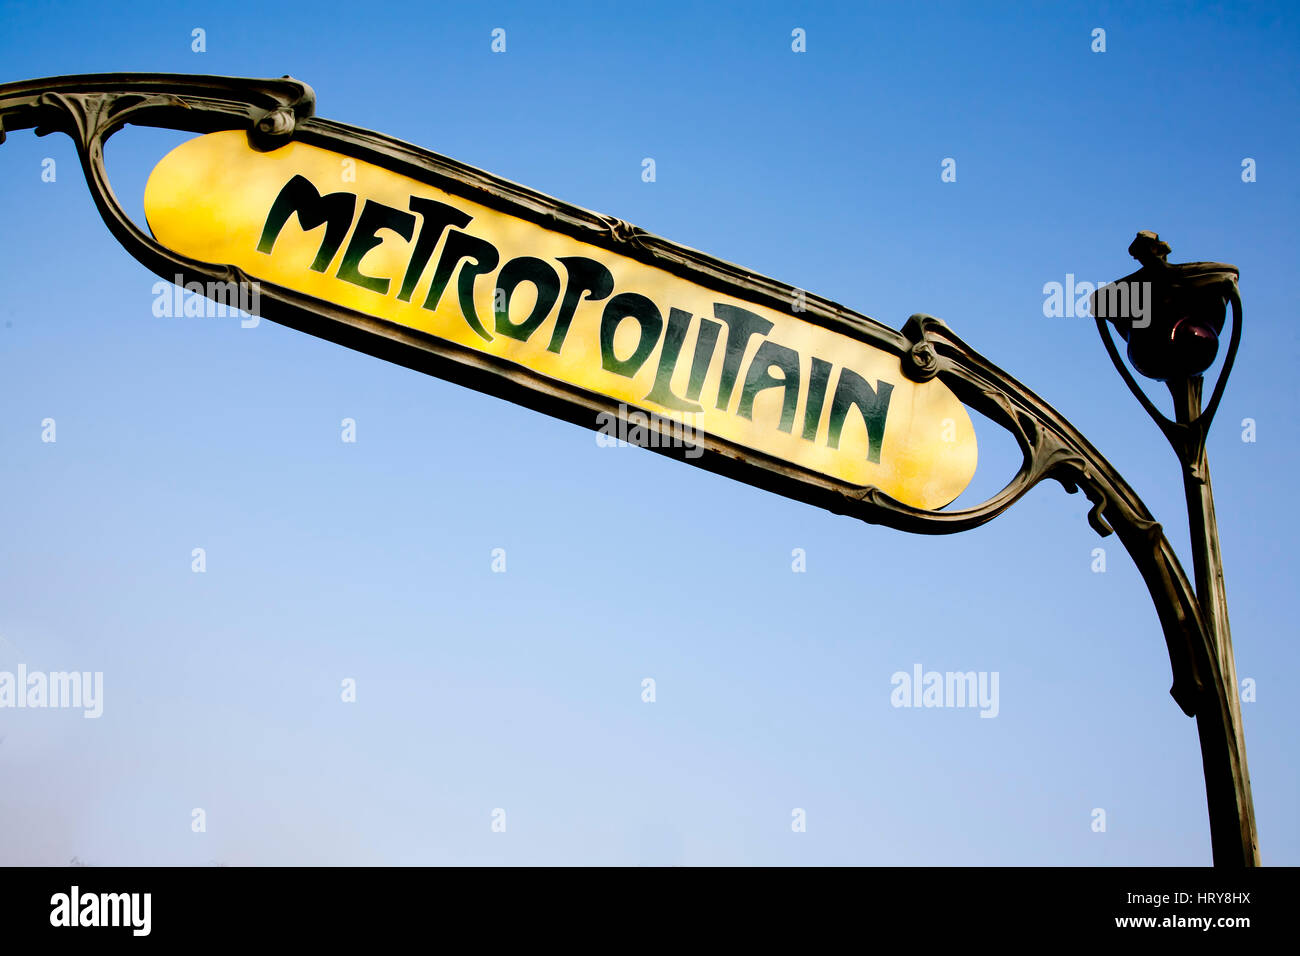 Metro signal. Paris, France, Europe. Stock Photo